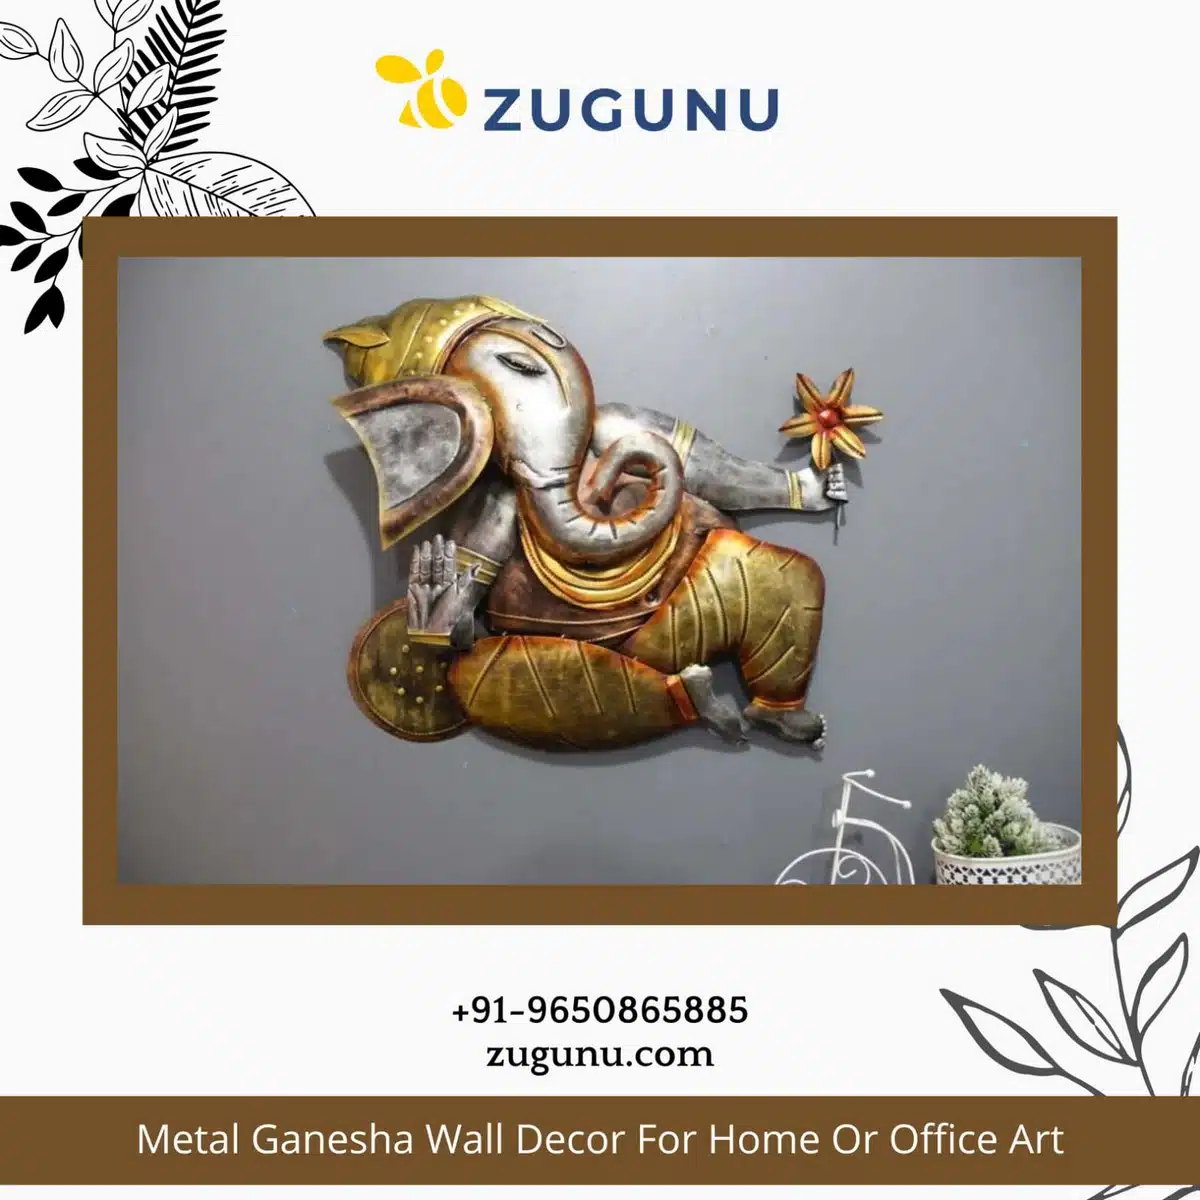 Metal Ganesha Wall Decor For Home And Office Zugunu